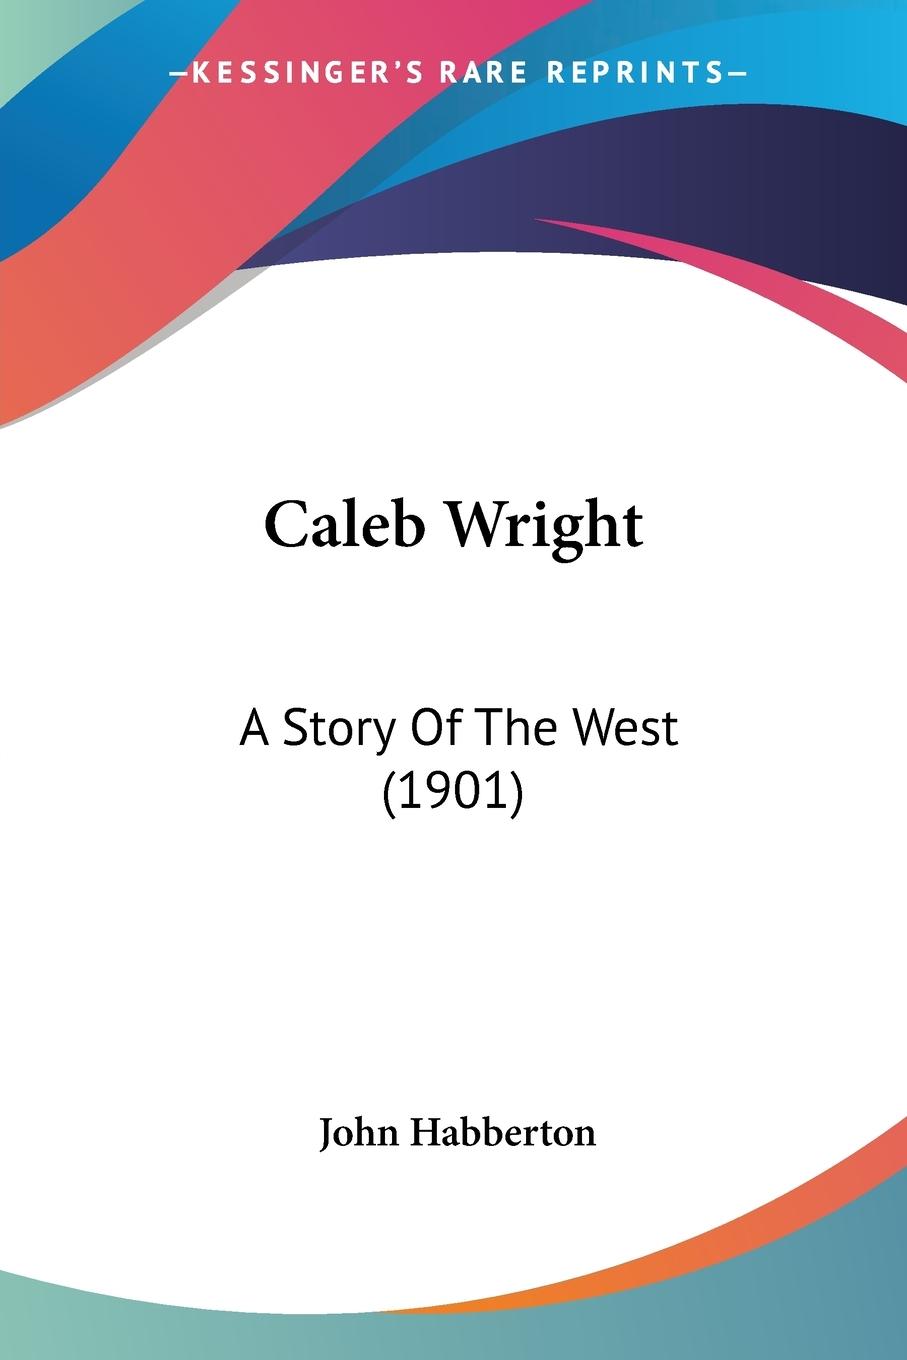 Caleb Wright - Habberton, John